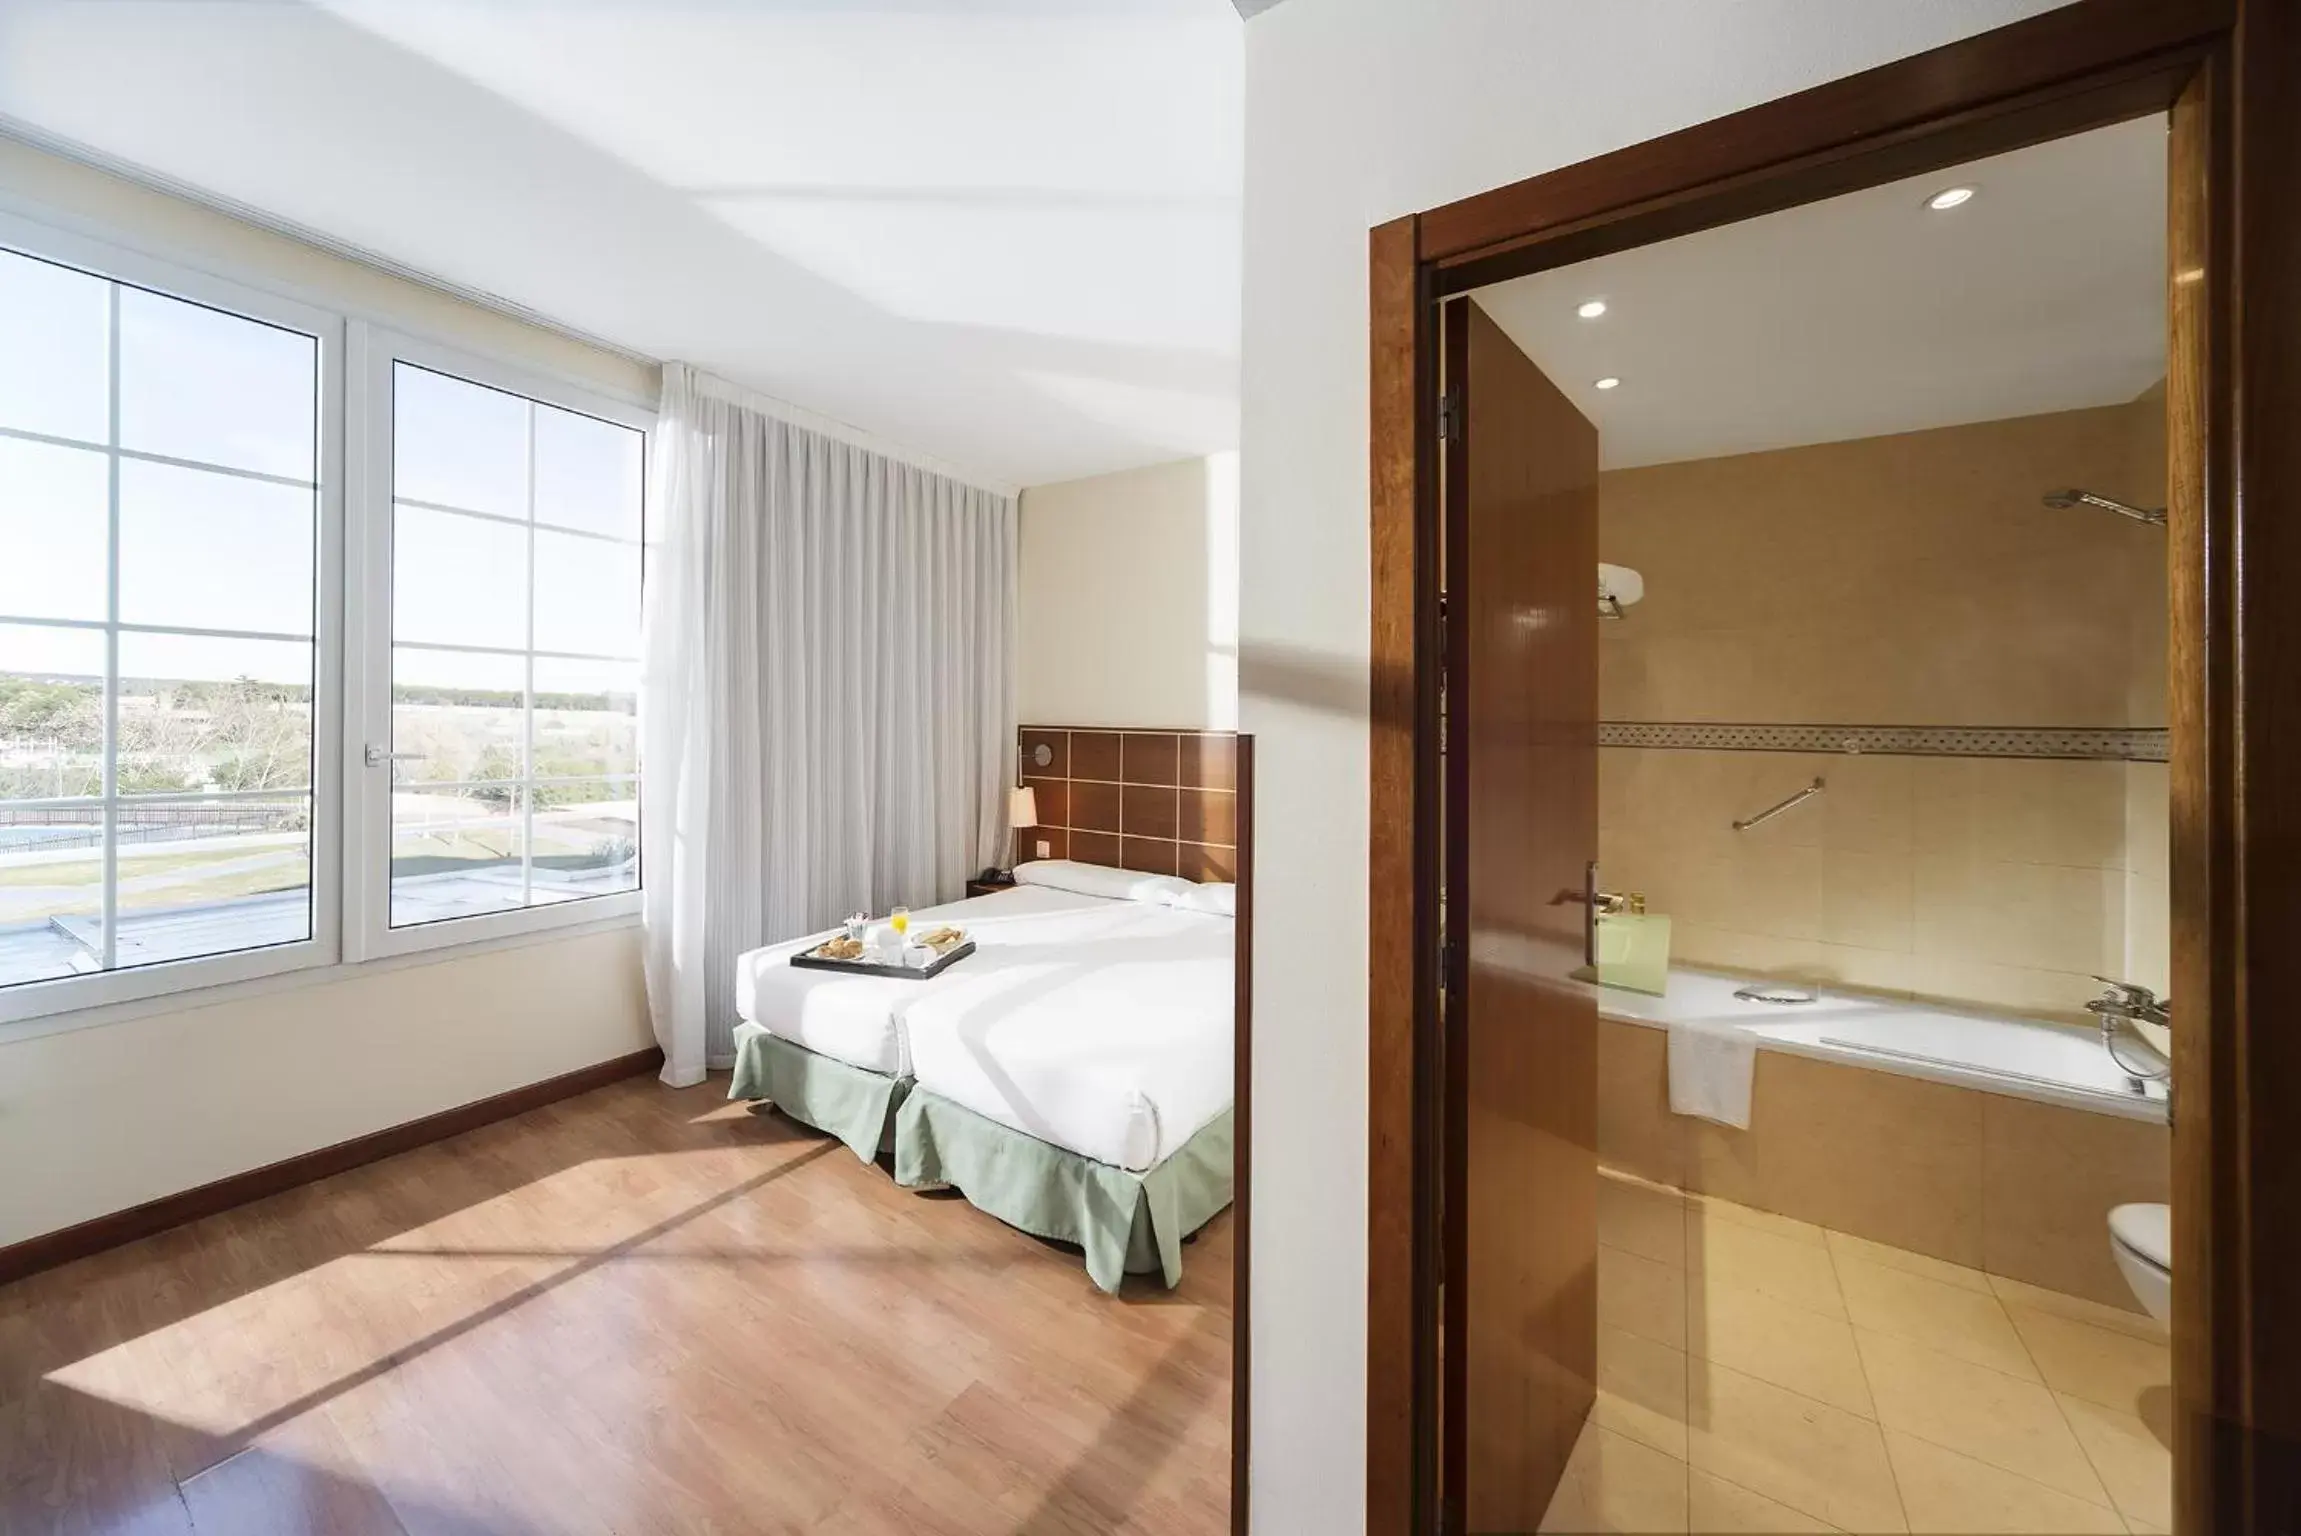 Bed, Room Photo in Eurostars Zarzuela Park Hotel